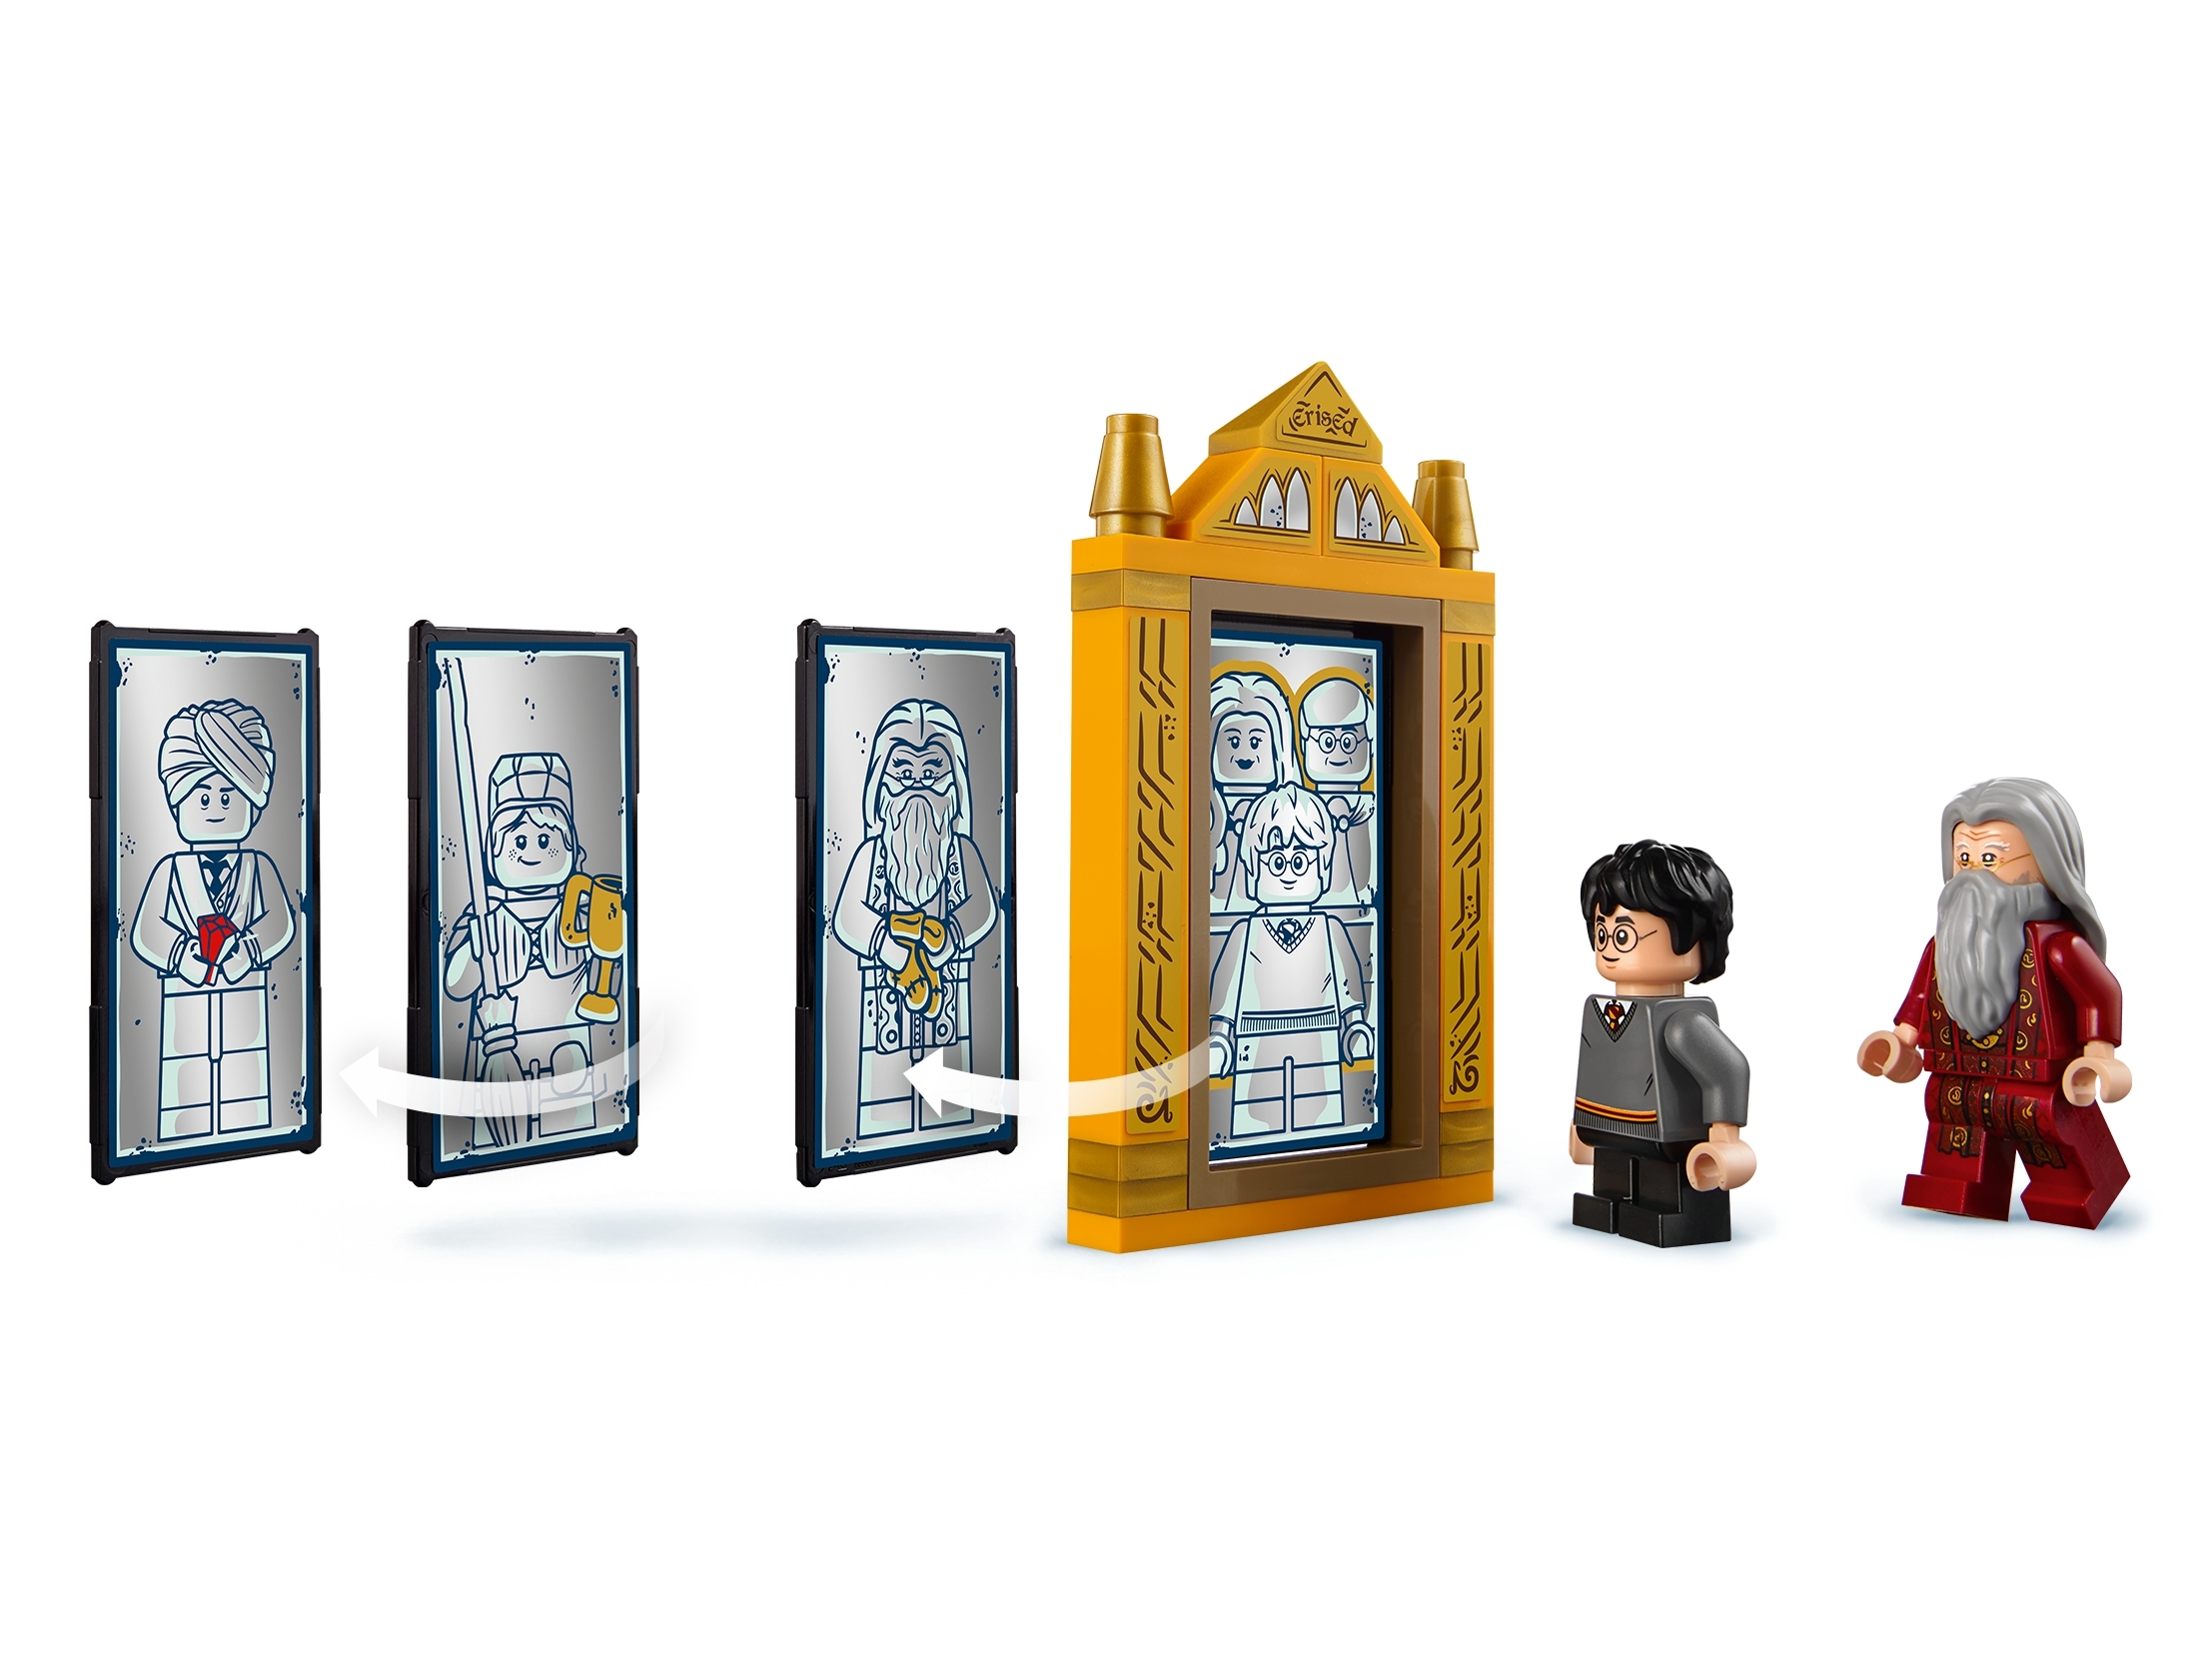 Lego - Harry Potter - La Grande salle du Château de Poudlard